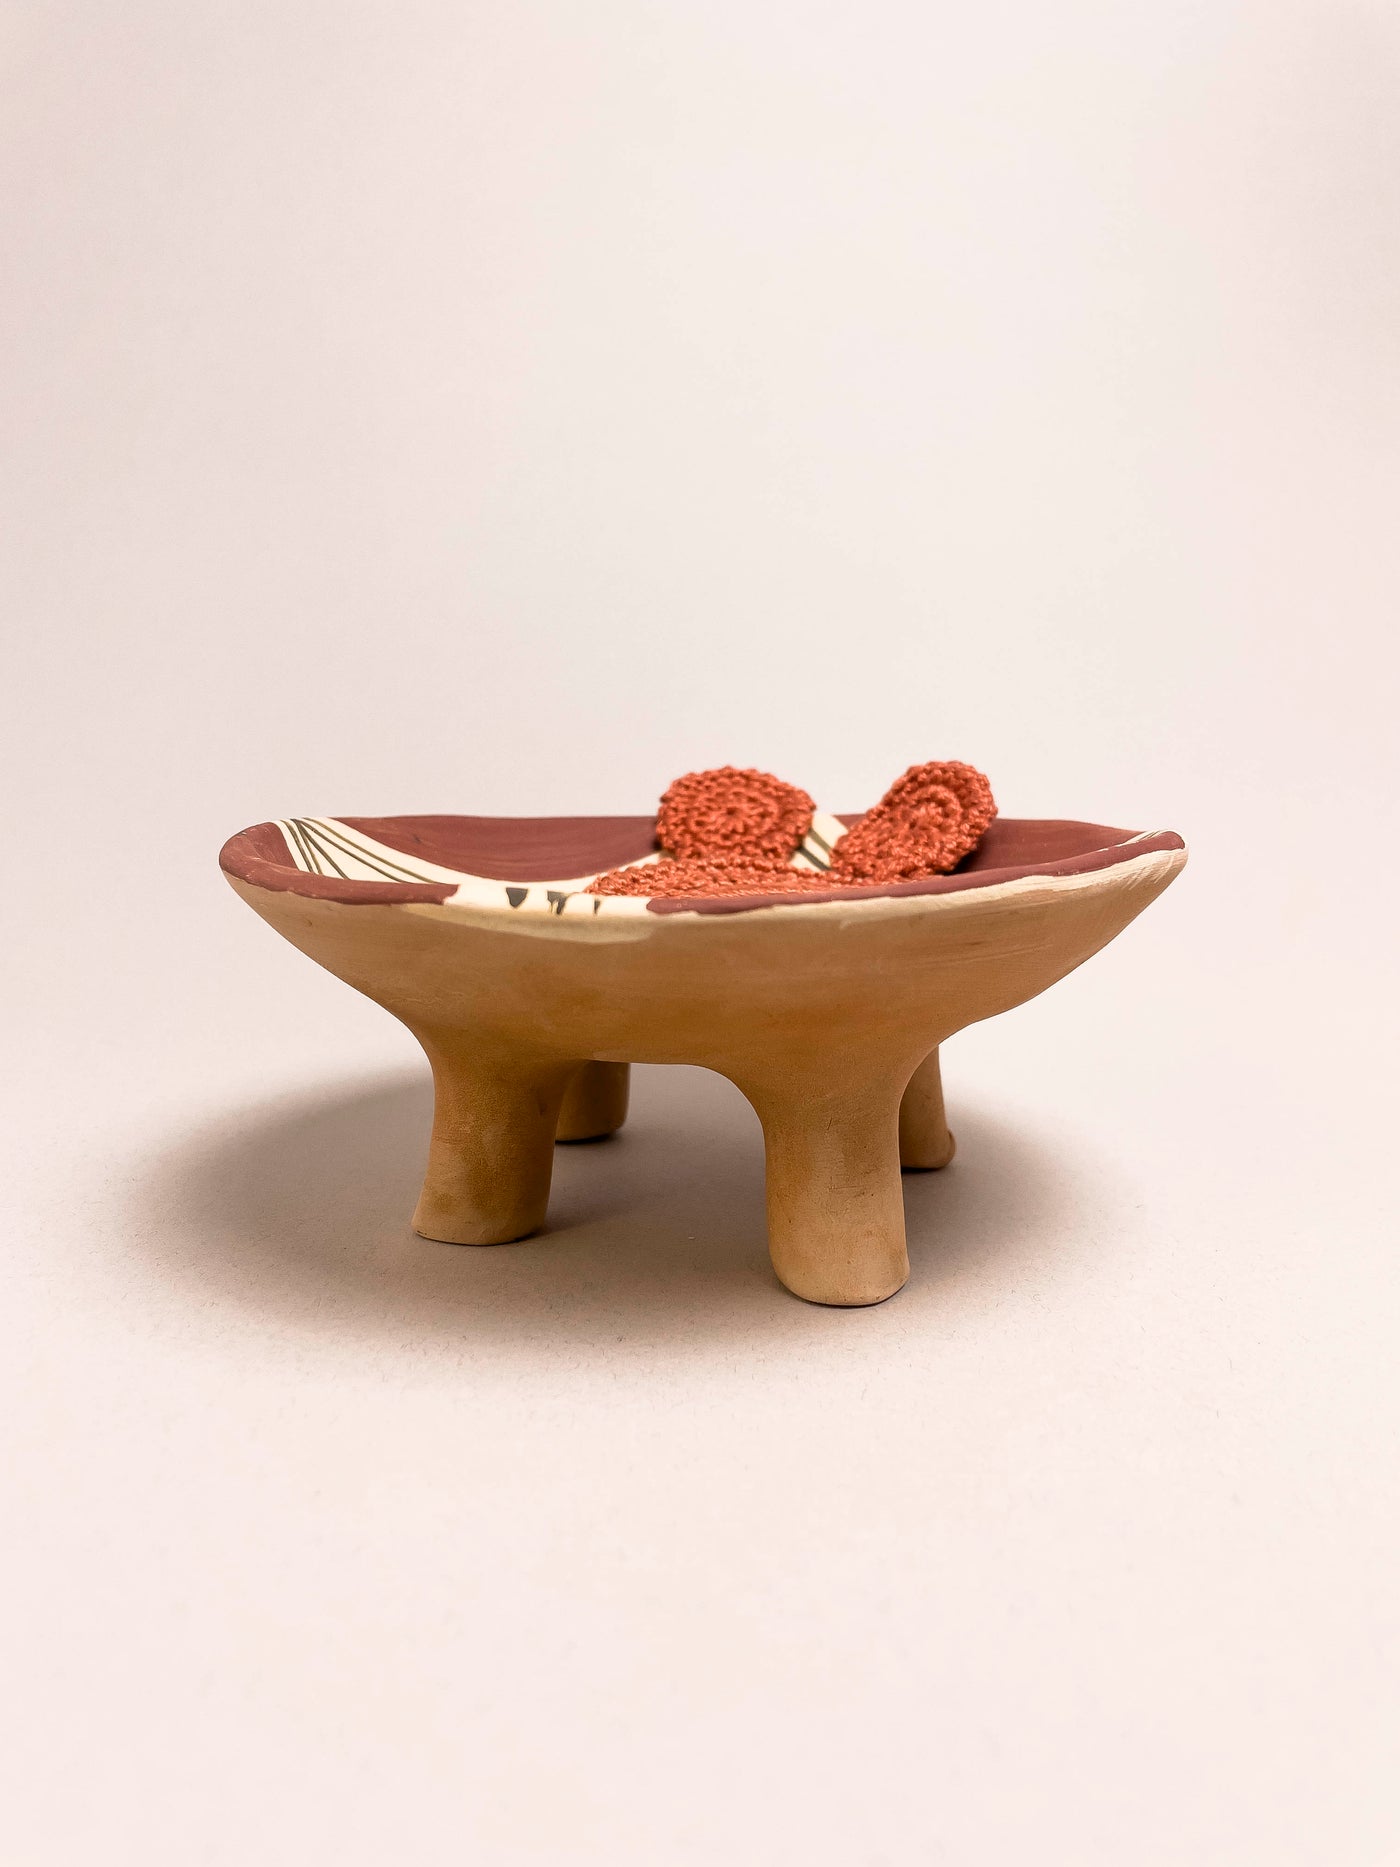 Decorative Round Altar Ceramic Bowl with Feet - Brown with Bird Motif